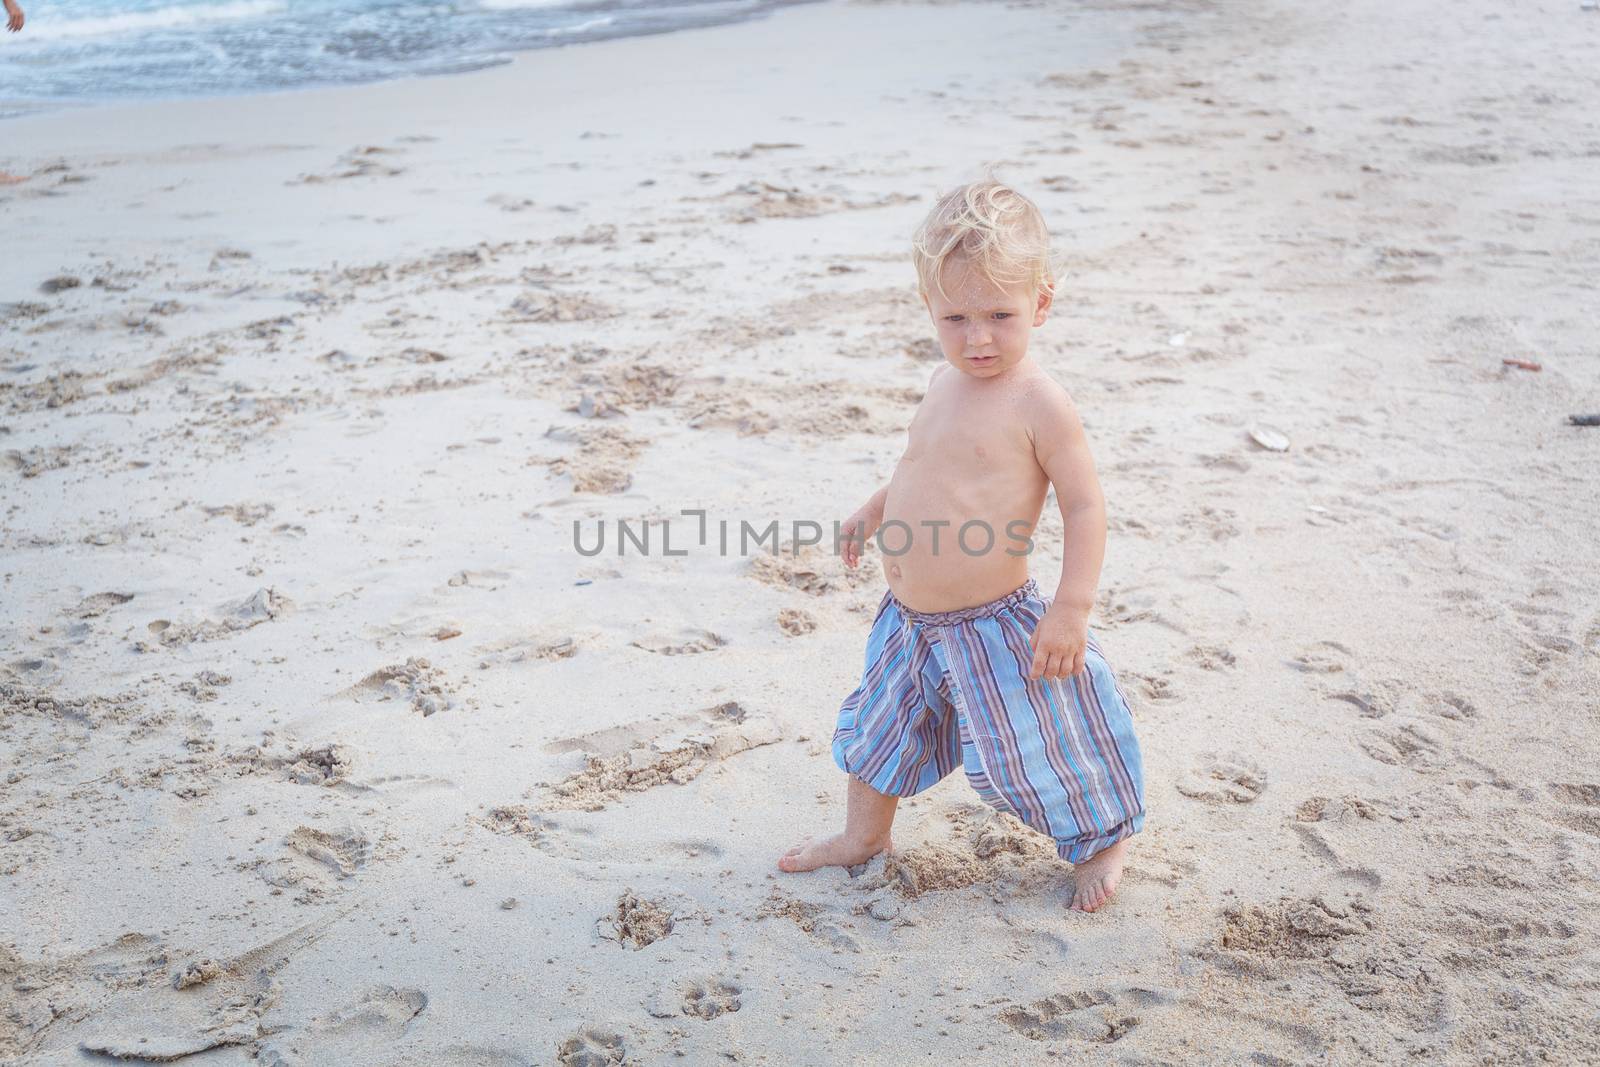 Toddler walking on a beach by gorov108